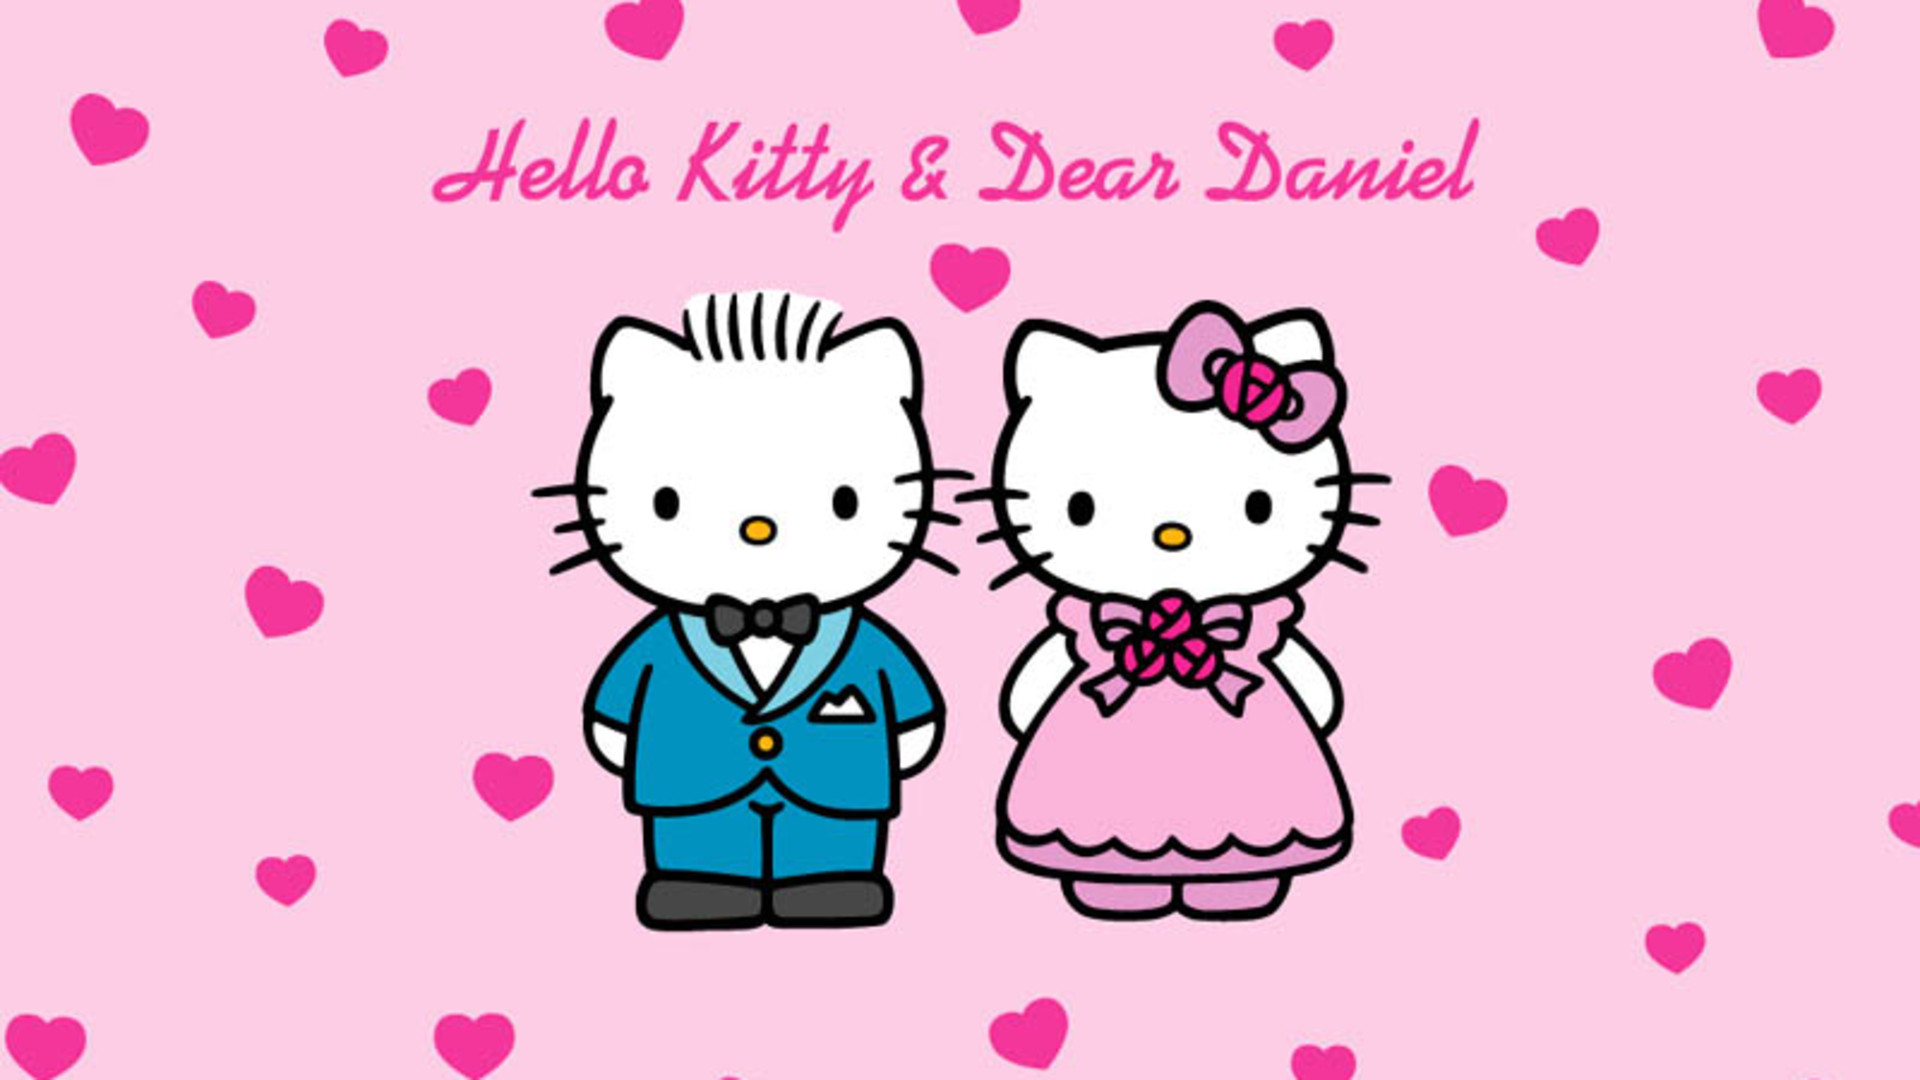 Hello Kitty Wallpaper For Pc - Hello Kitty And Dear Daniel - HD Wallpaper 